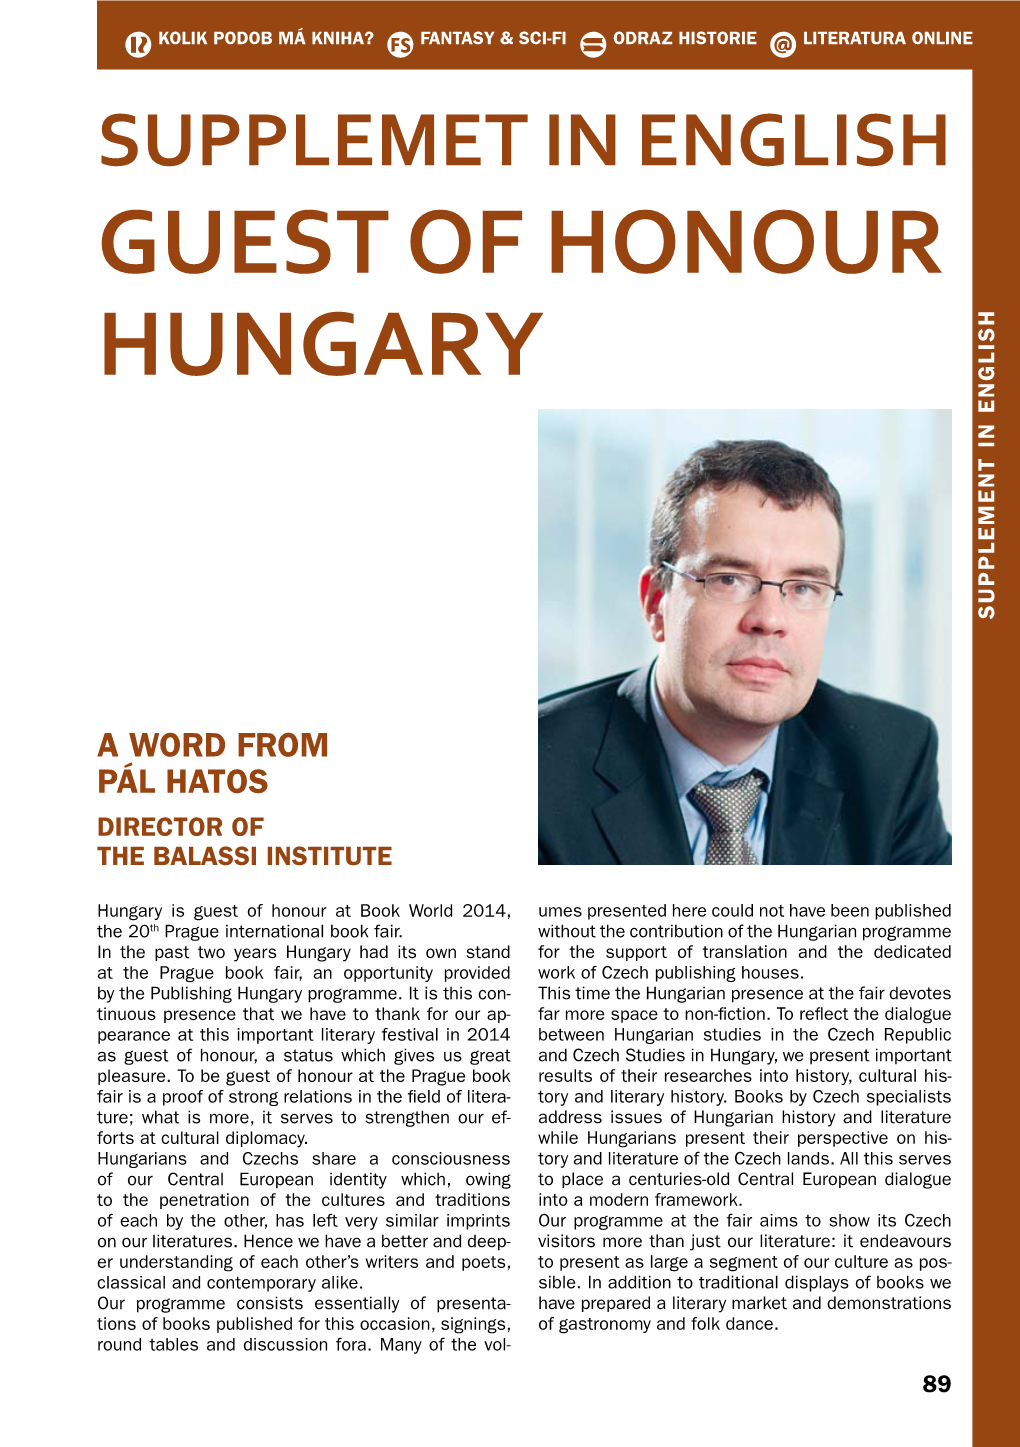 Guest of Honour Hungary (*.Pdf)